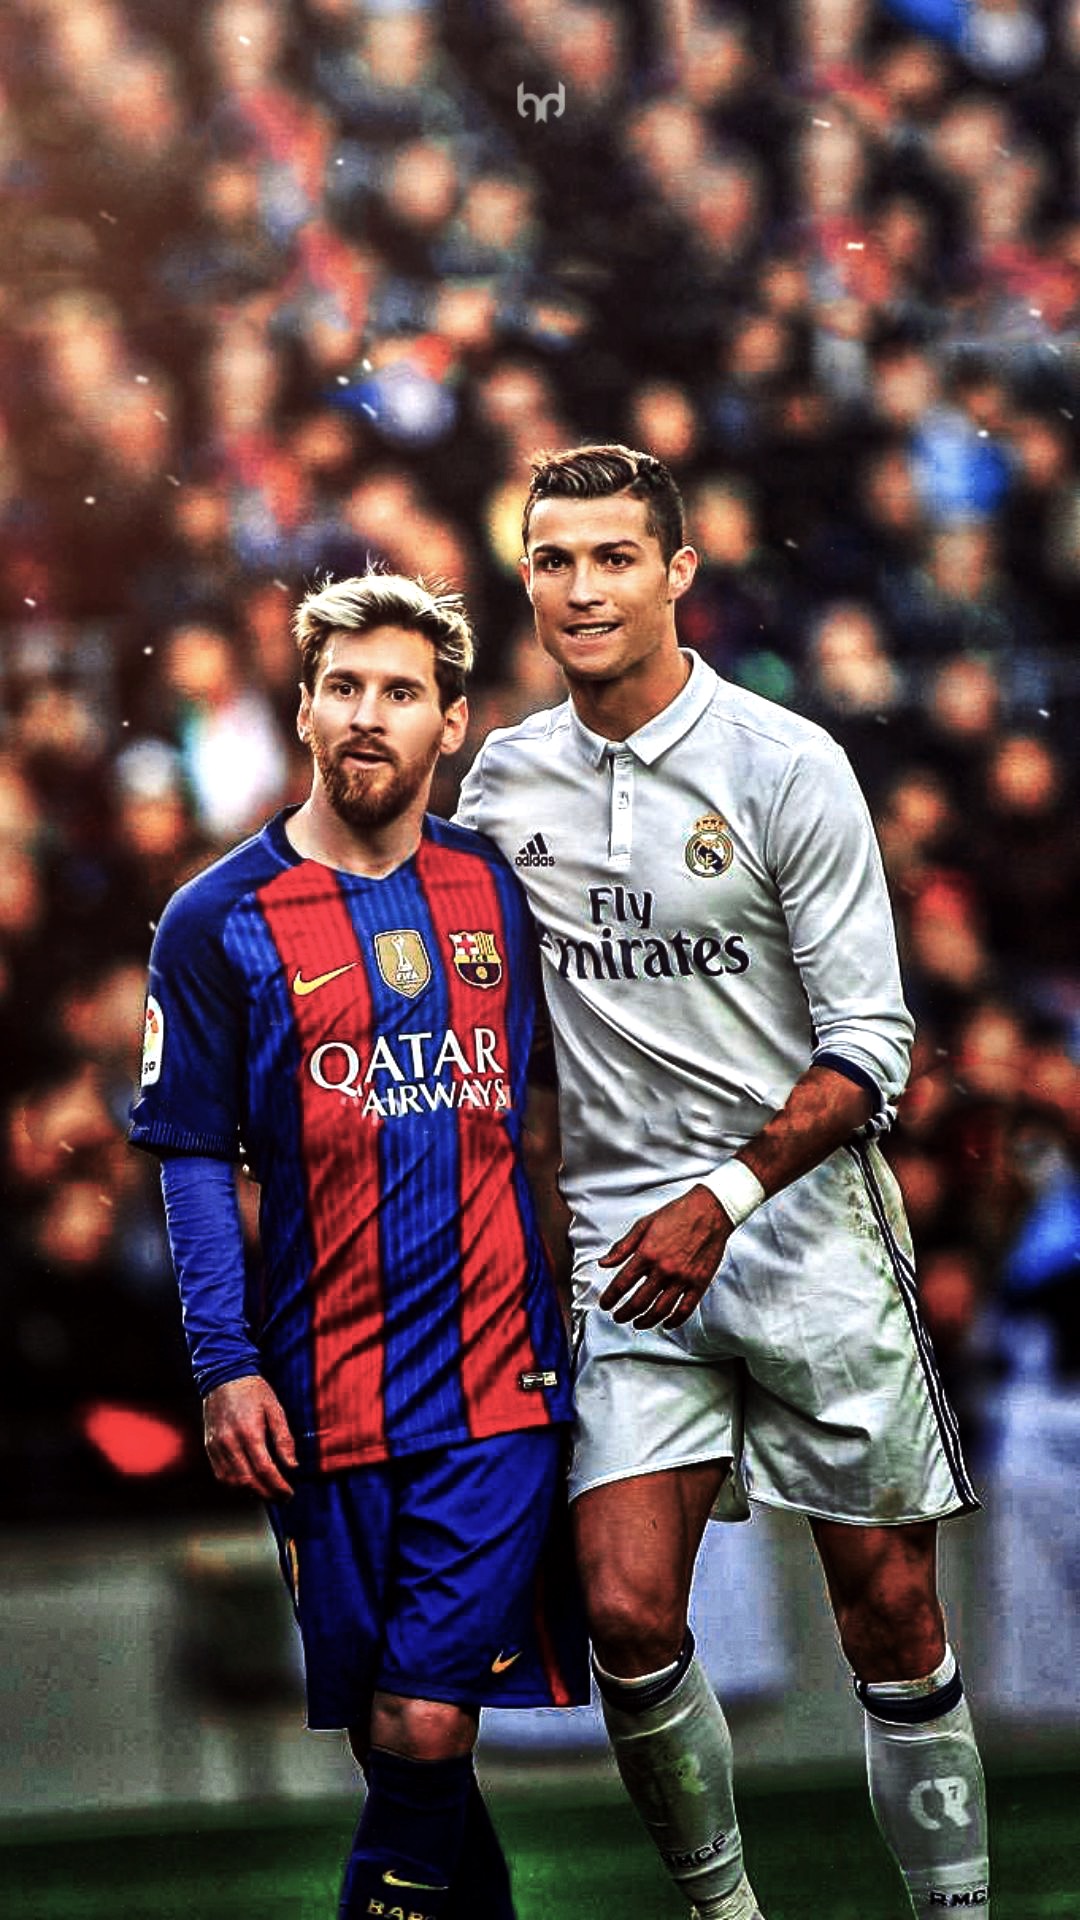 Ronaldo and Messi Wallpaper Ronaldo and Messi Wallpaper Download